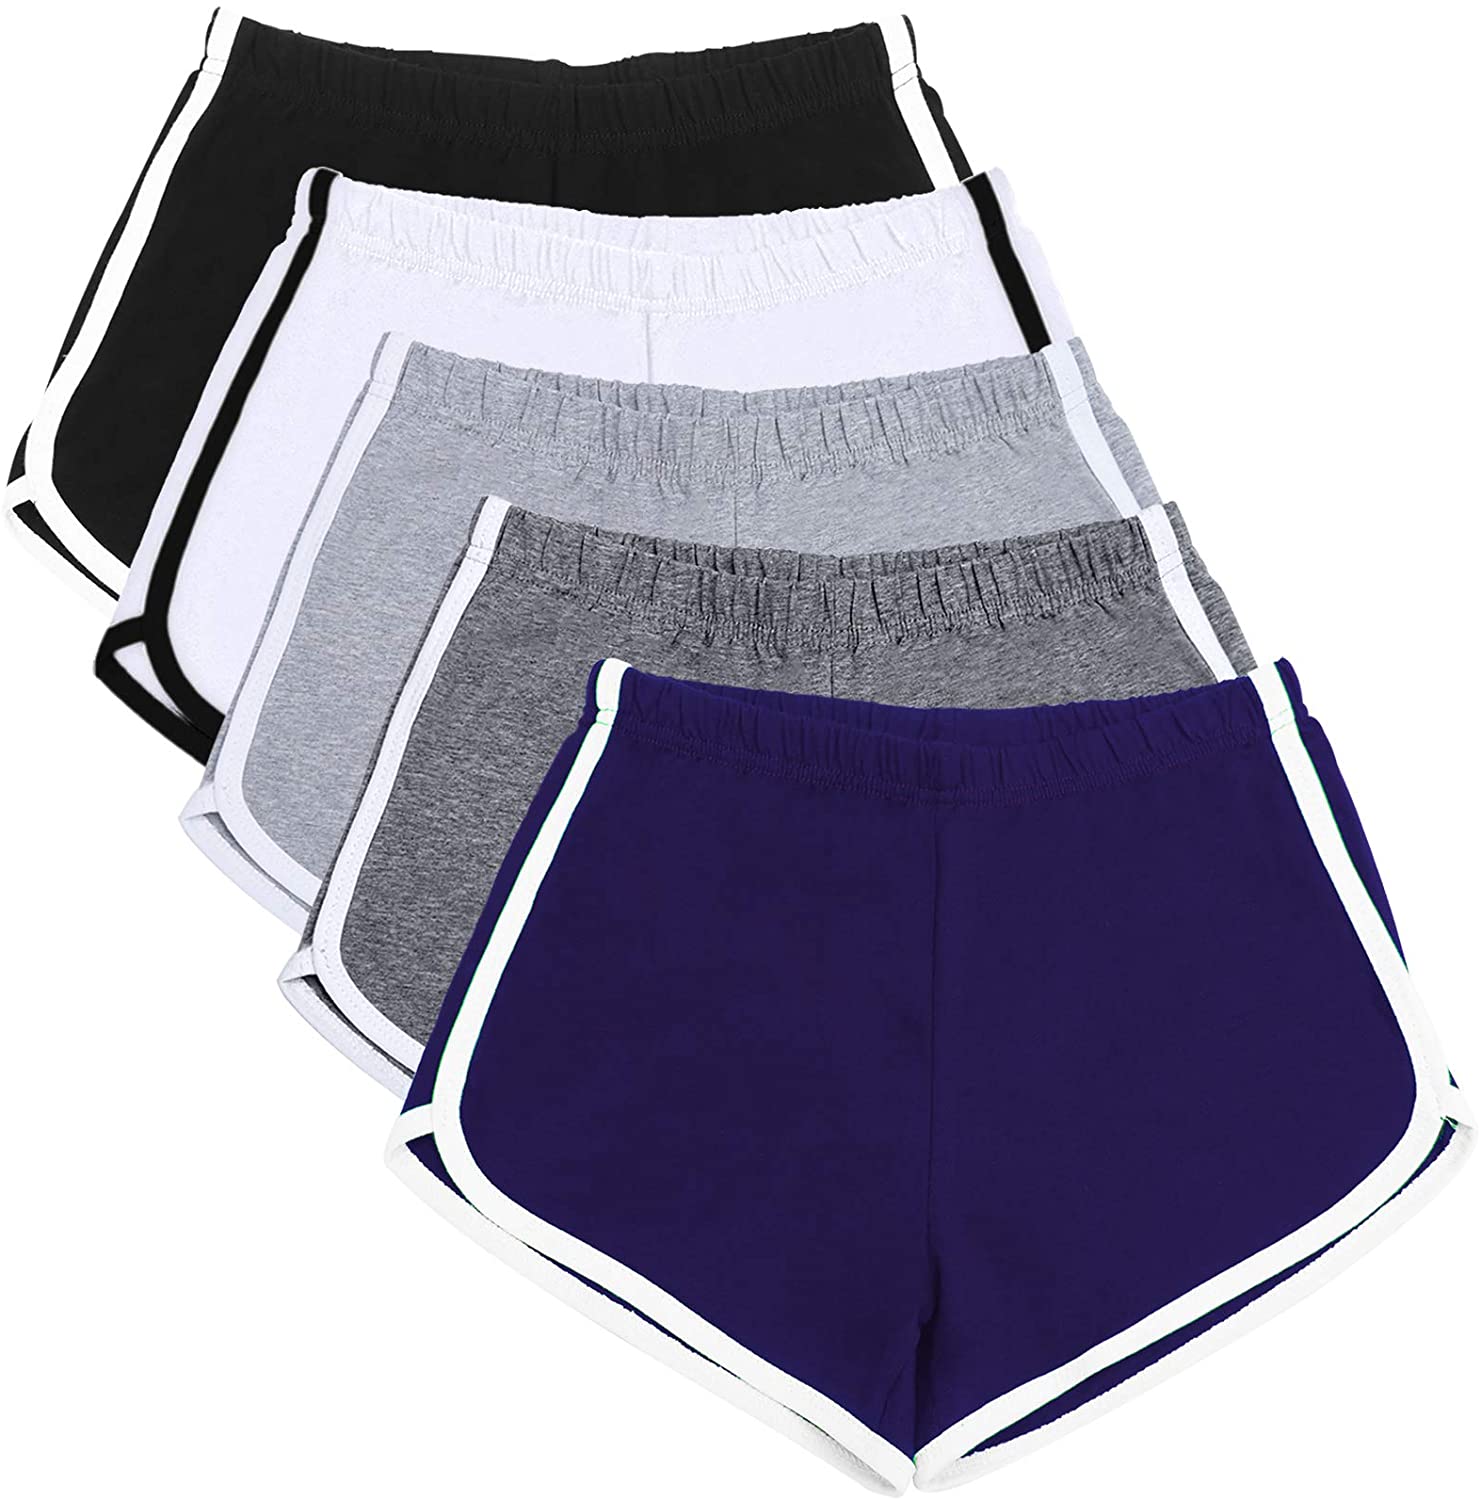 URATOT 2 Pack Cotton Sport Shorts Yoga Dance Short Pants Summer